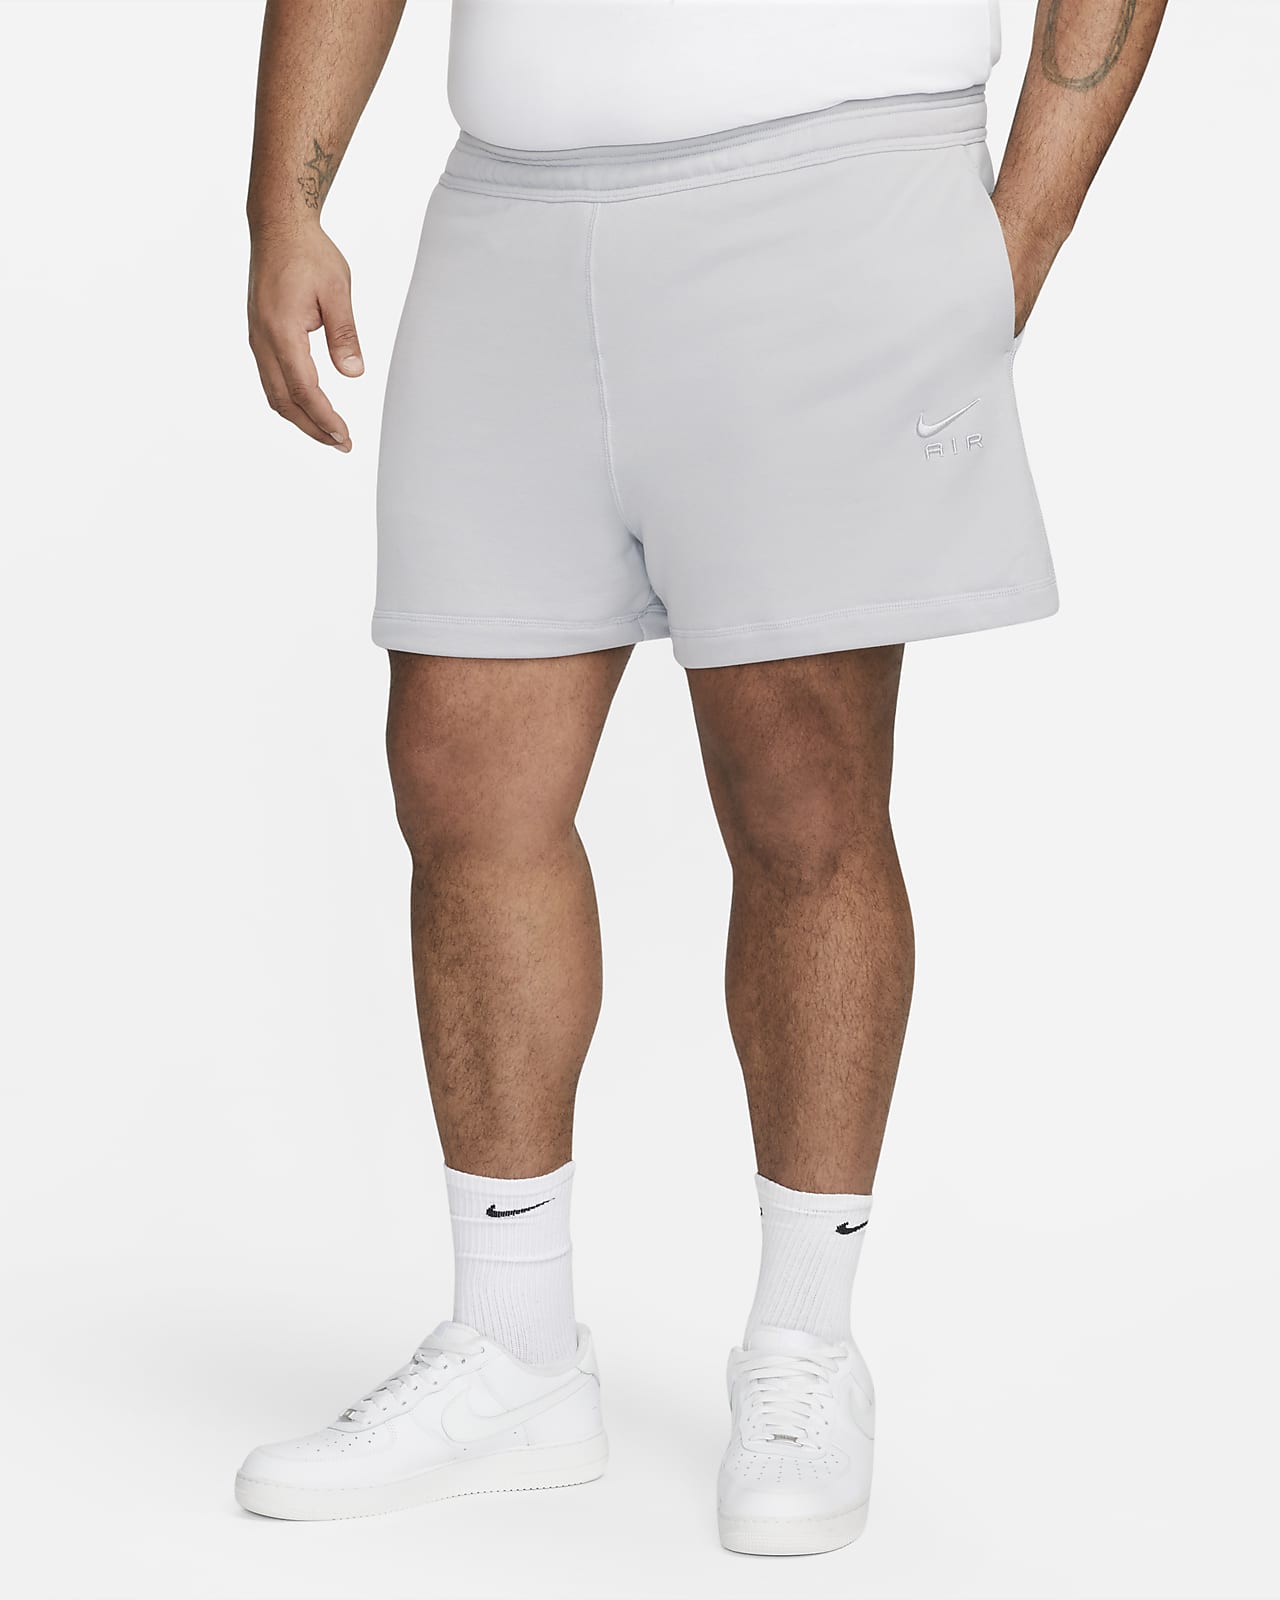 Sportswear French Nike Air Shorts. Terry Men\'s